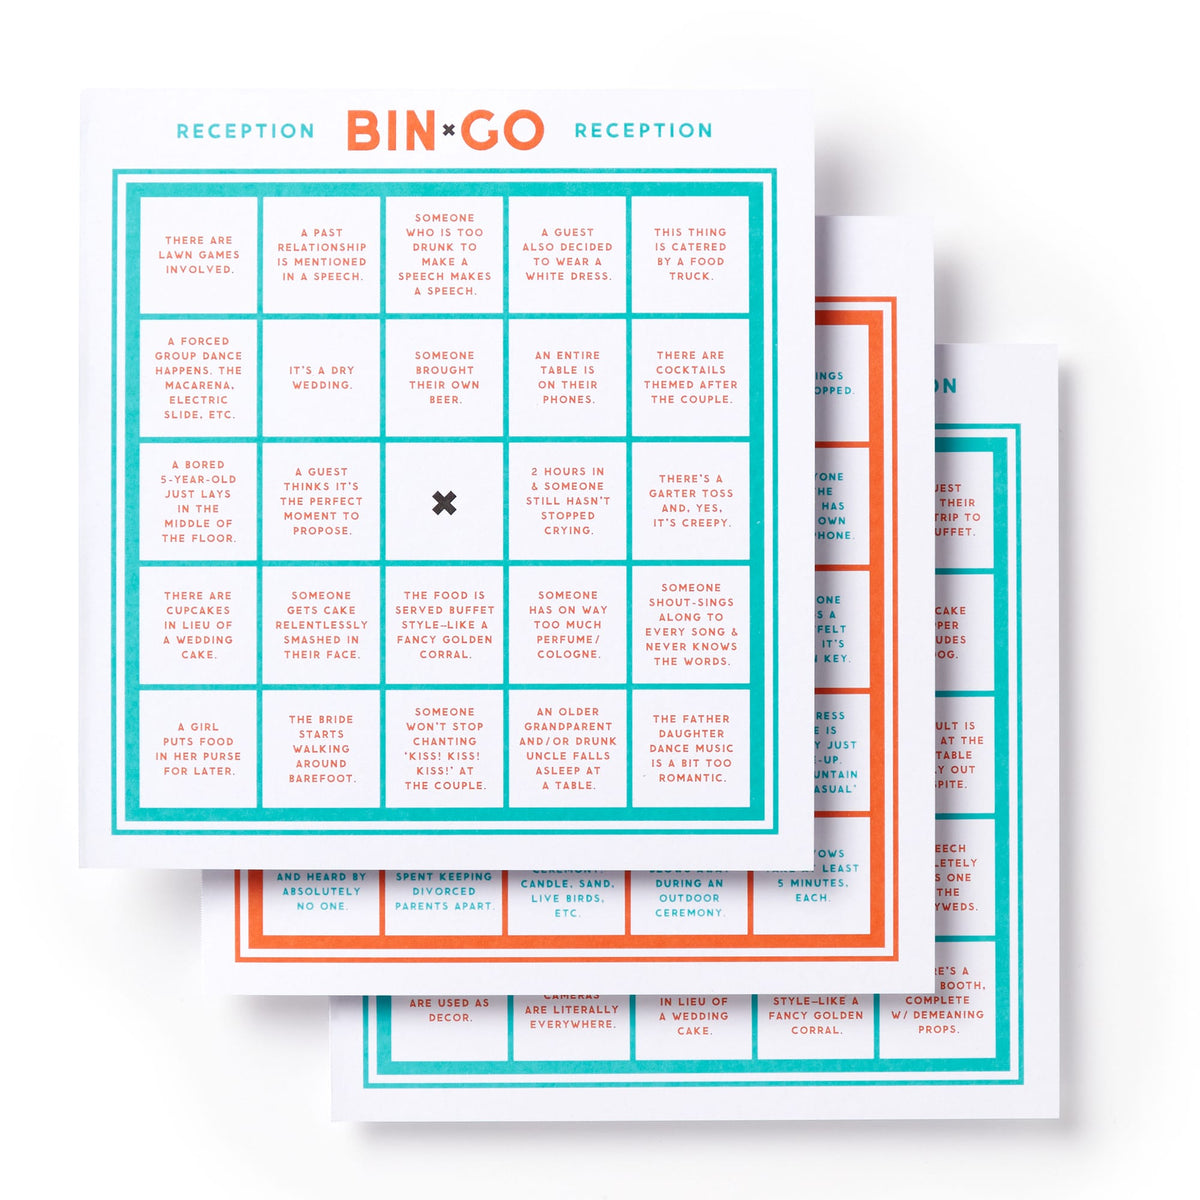 Bin-go Endure A Wedding Bingo Book - Brass Monkey - 9780735377066